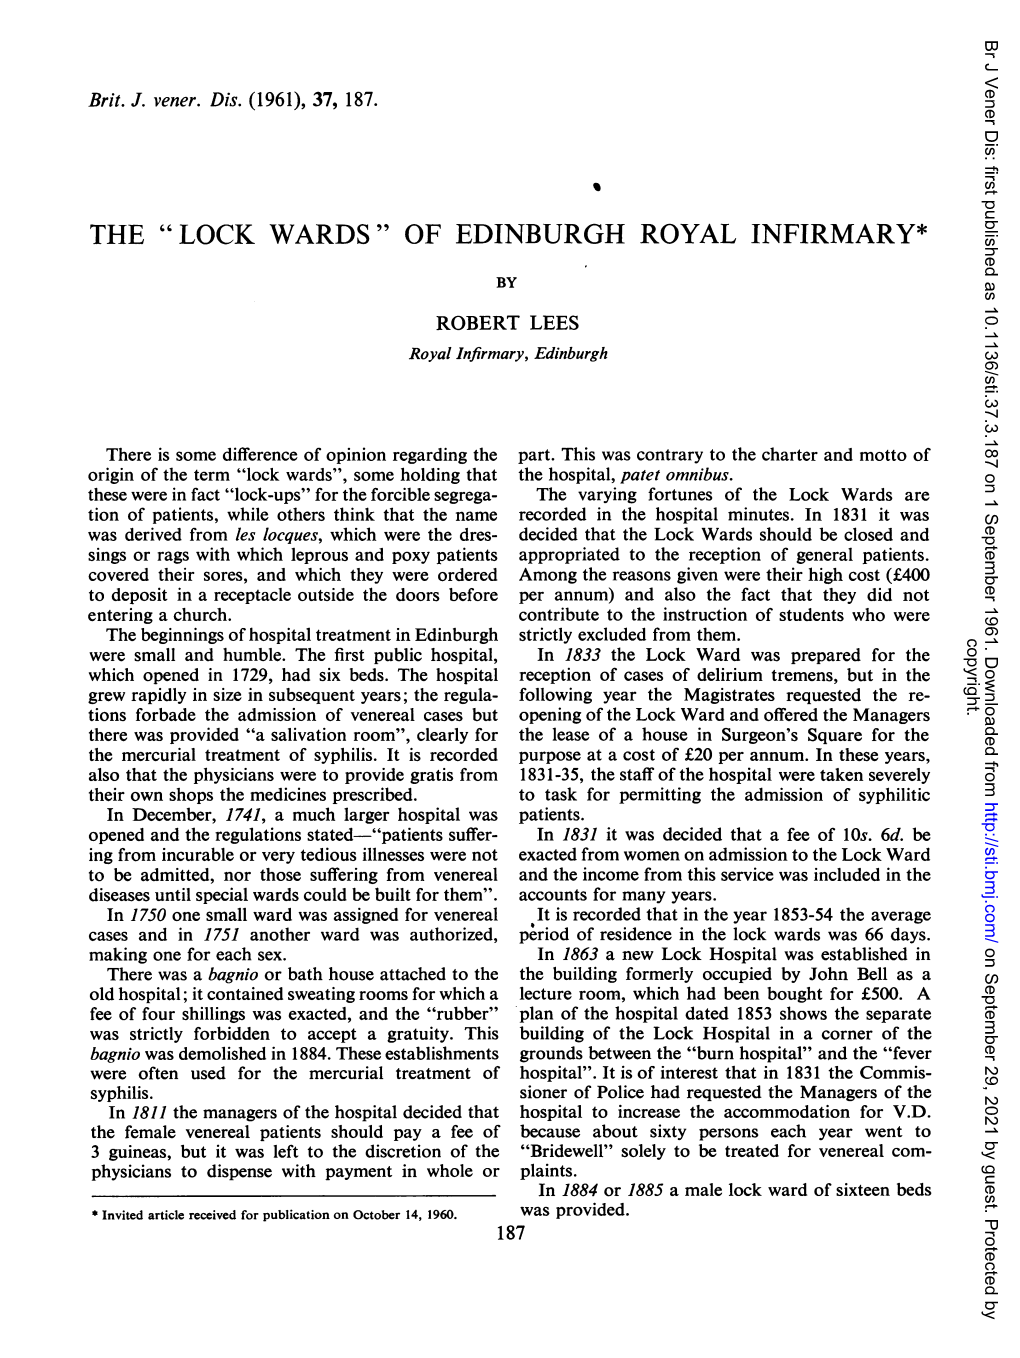 The "Lock Wards" of Edinburgh Royal Infirmary*